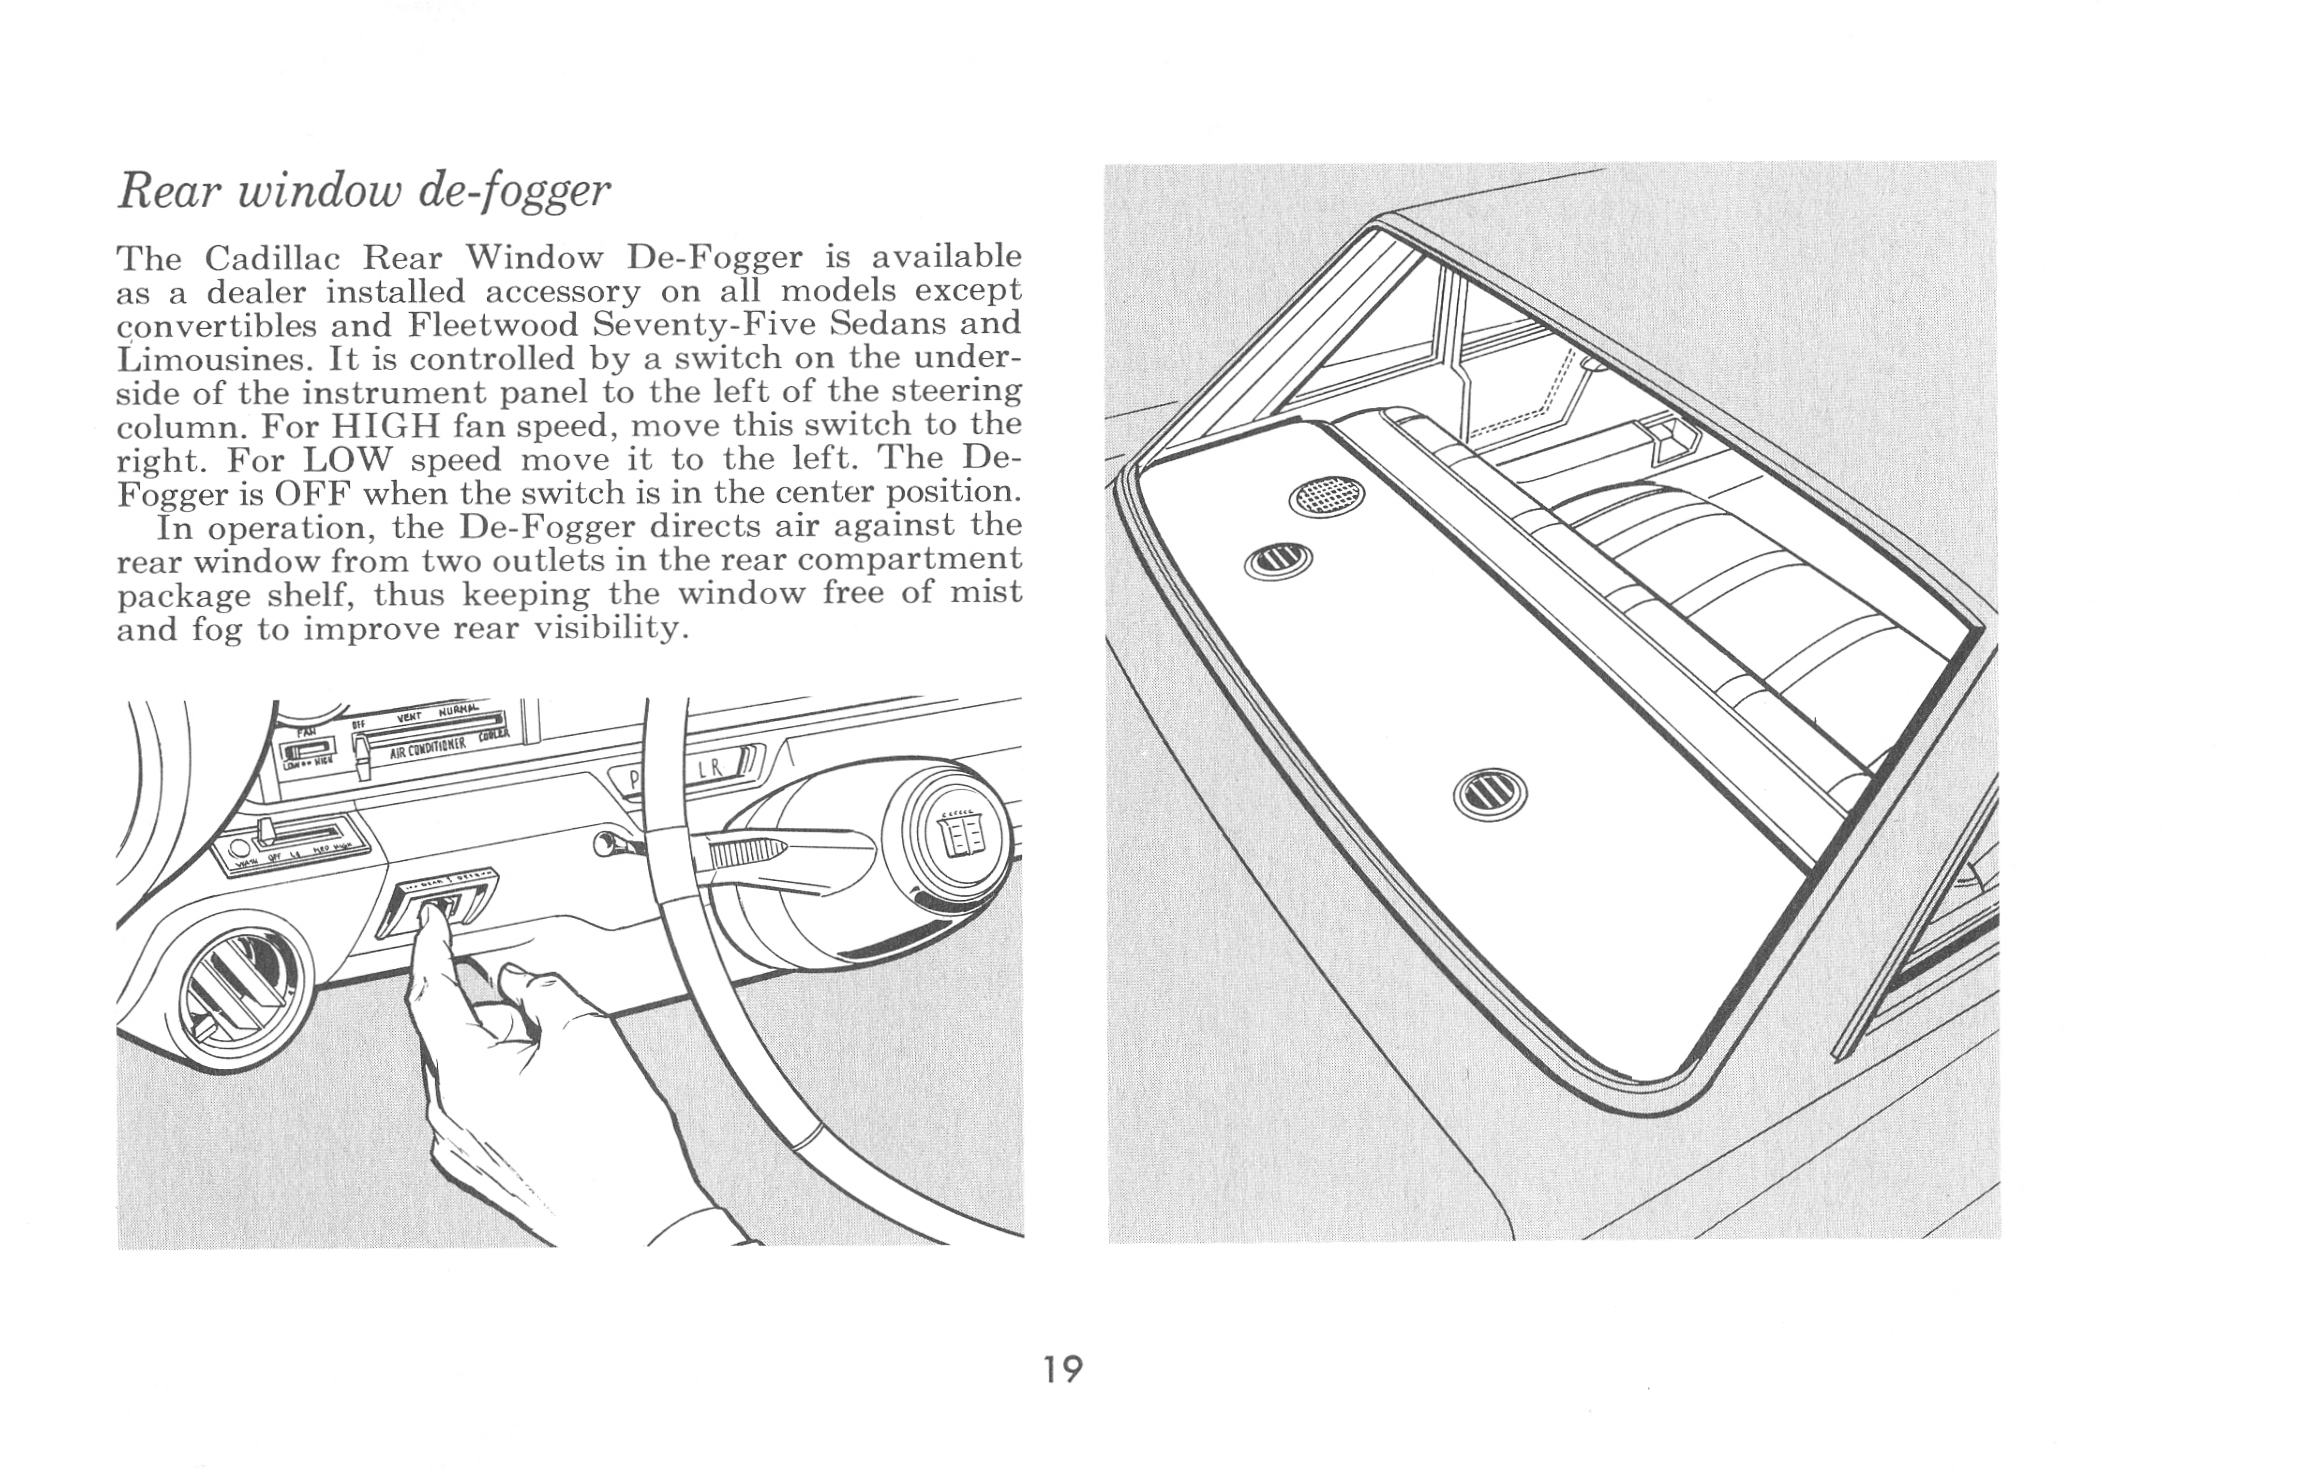 n_1962 Cadillac Owner's Manual-Page 19.jpg